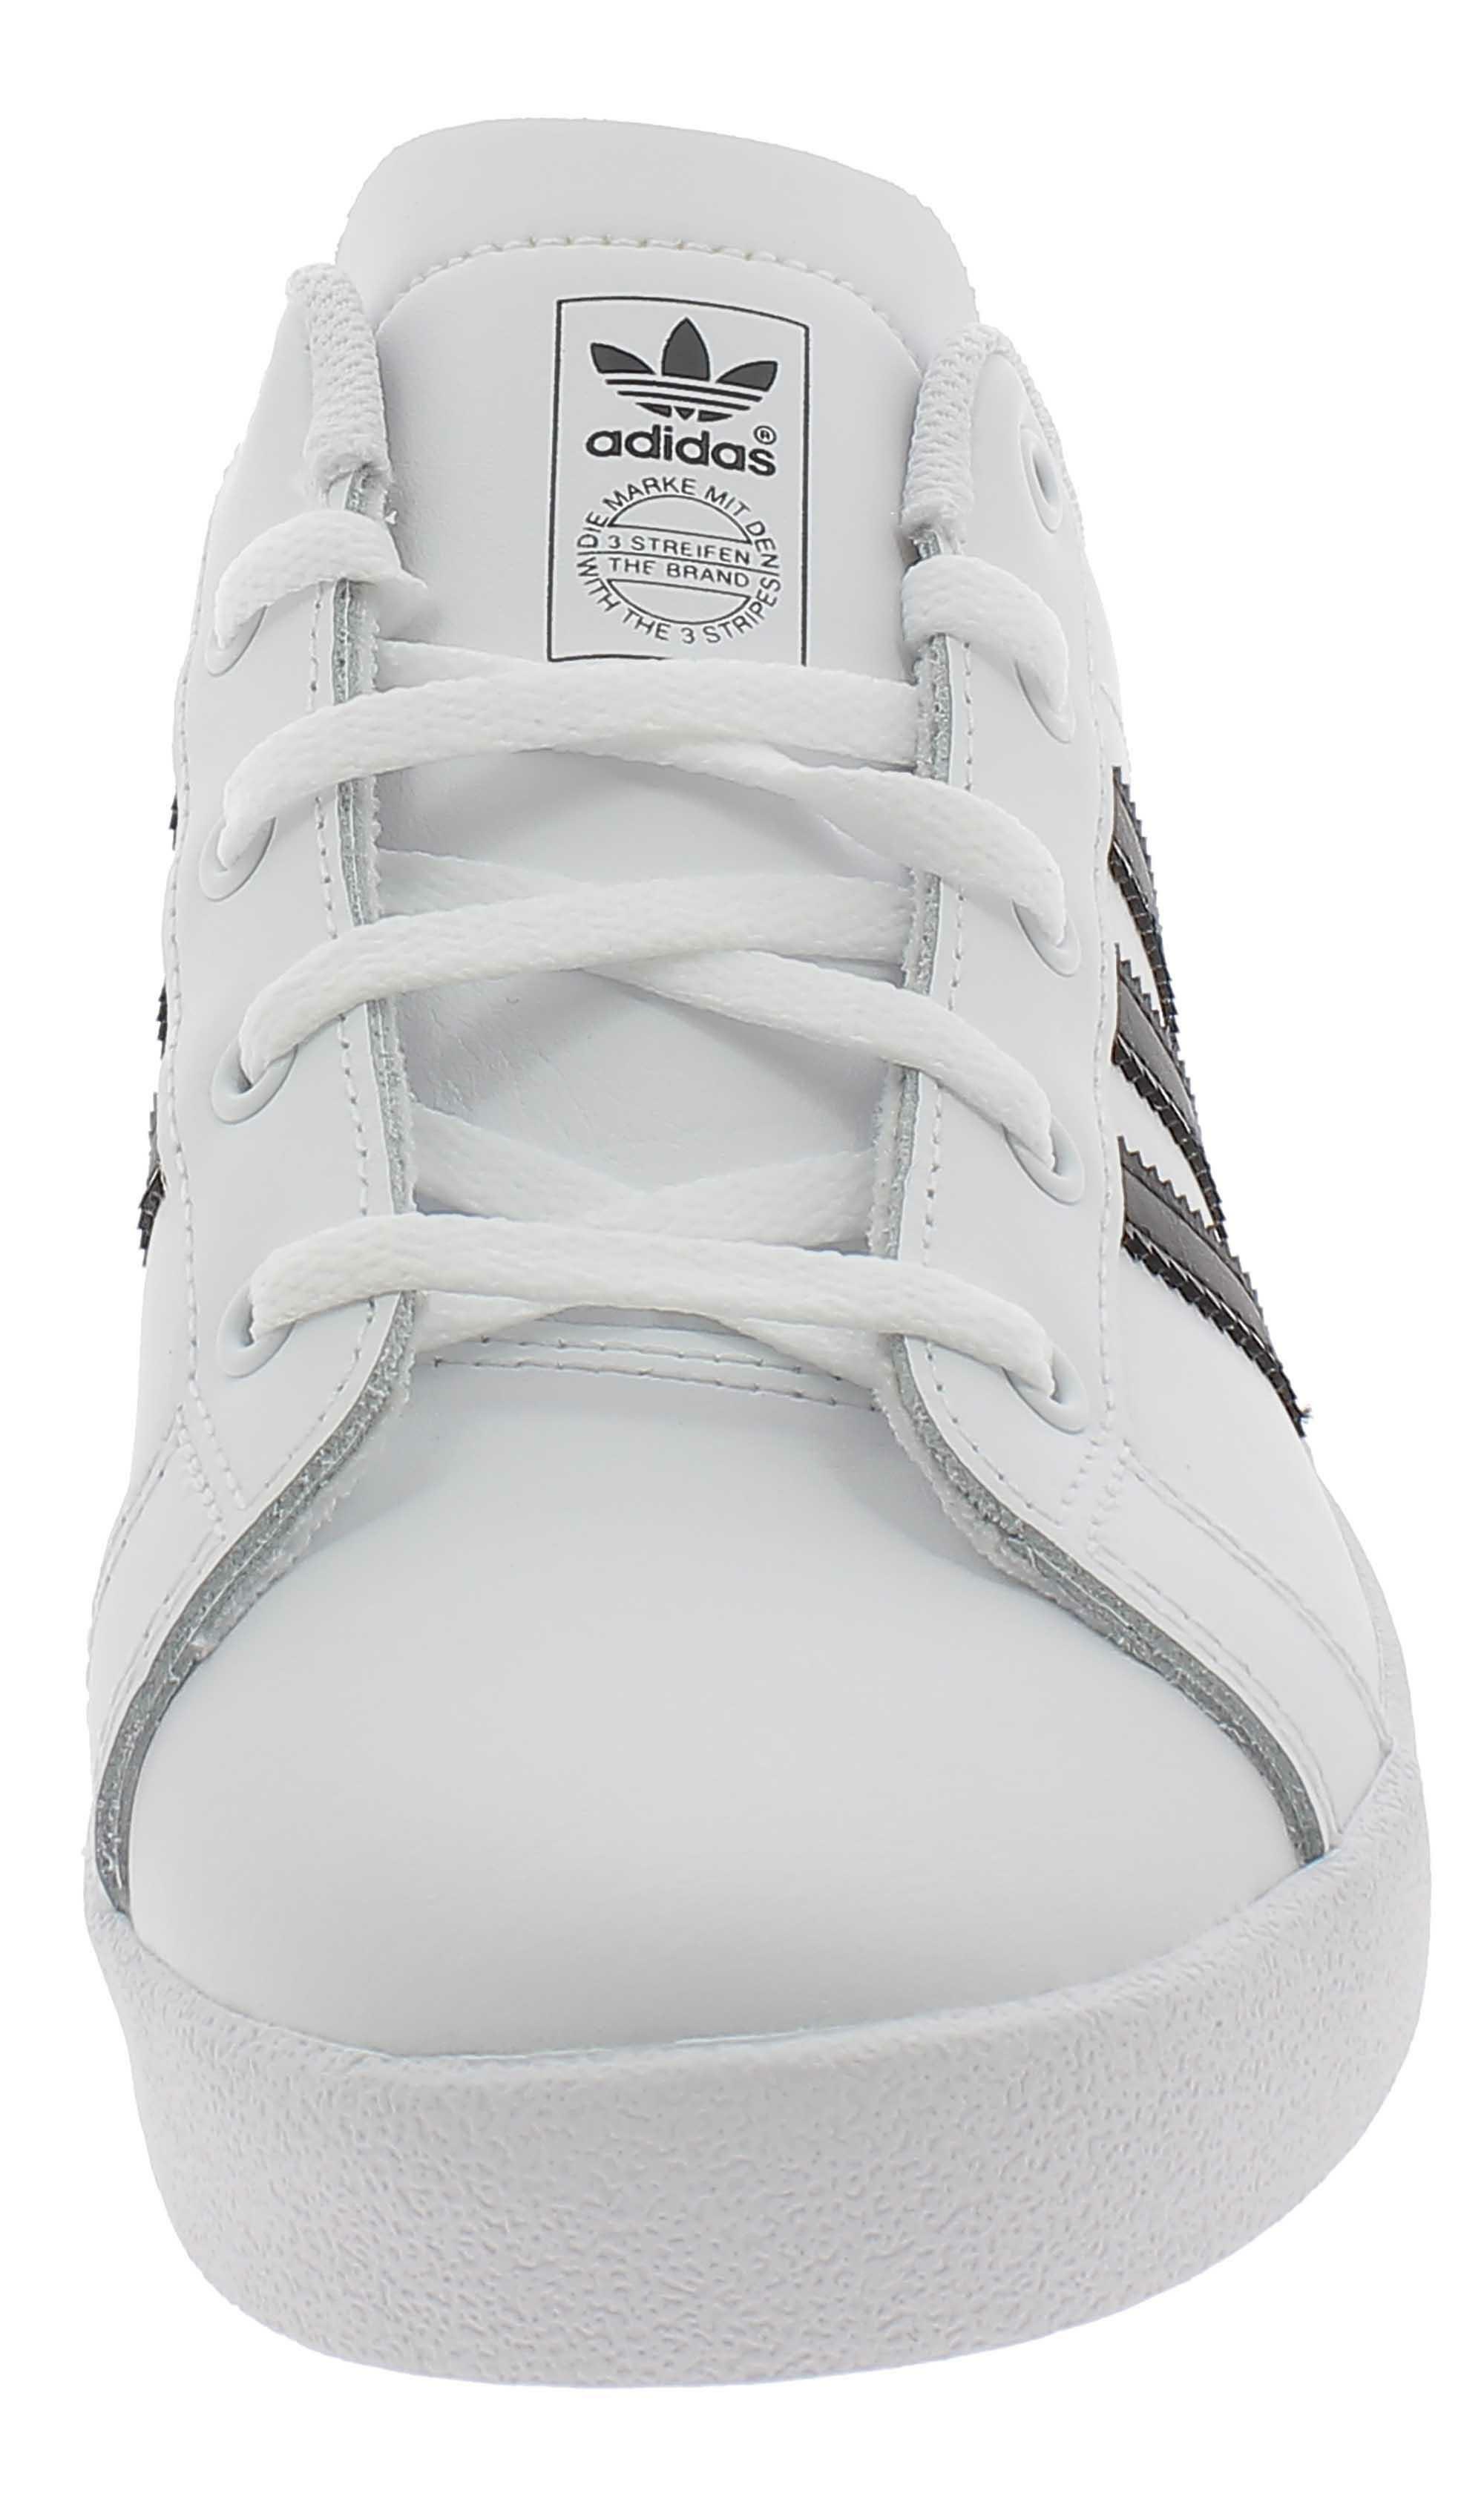 adidas originals adidas coast star c scarpe sportive bambino unisex bianche ee7485